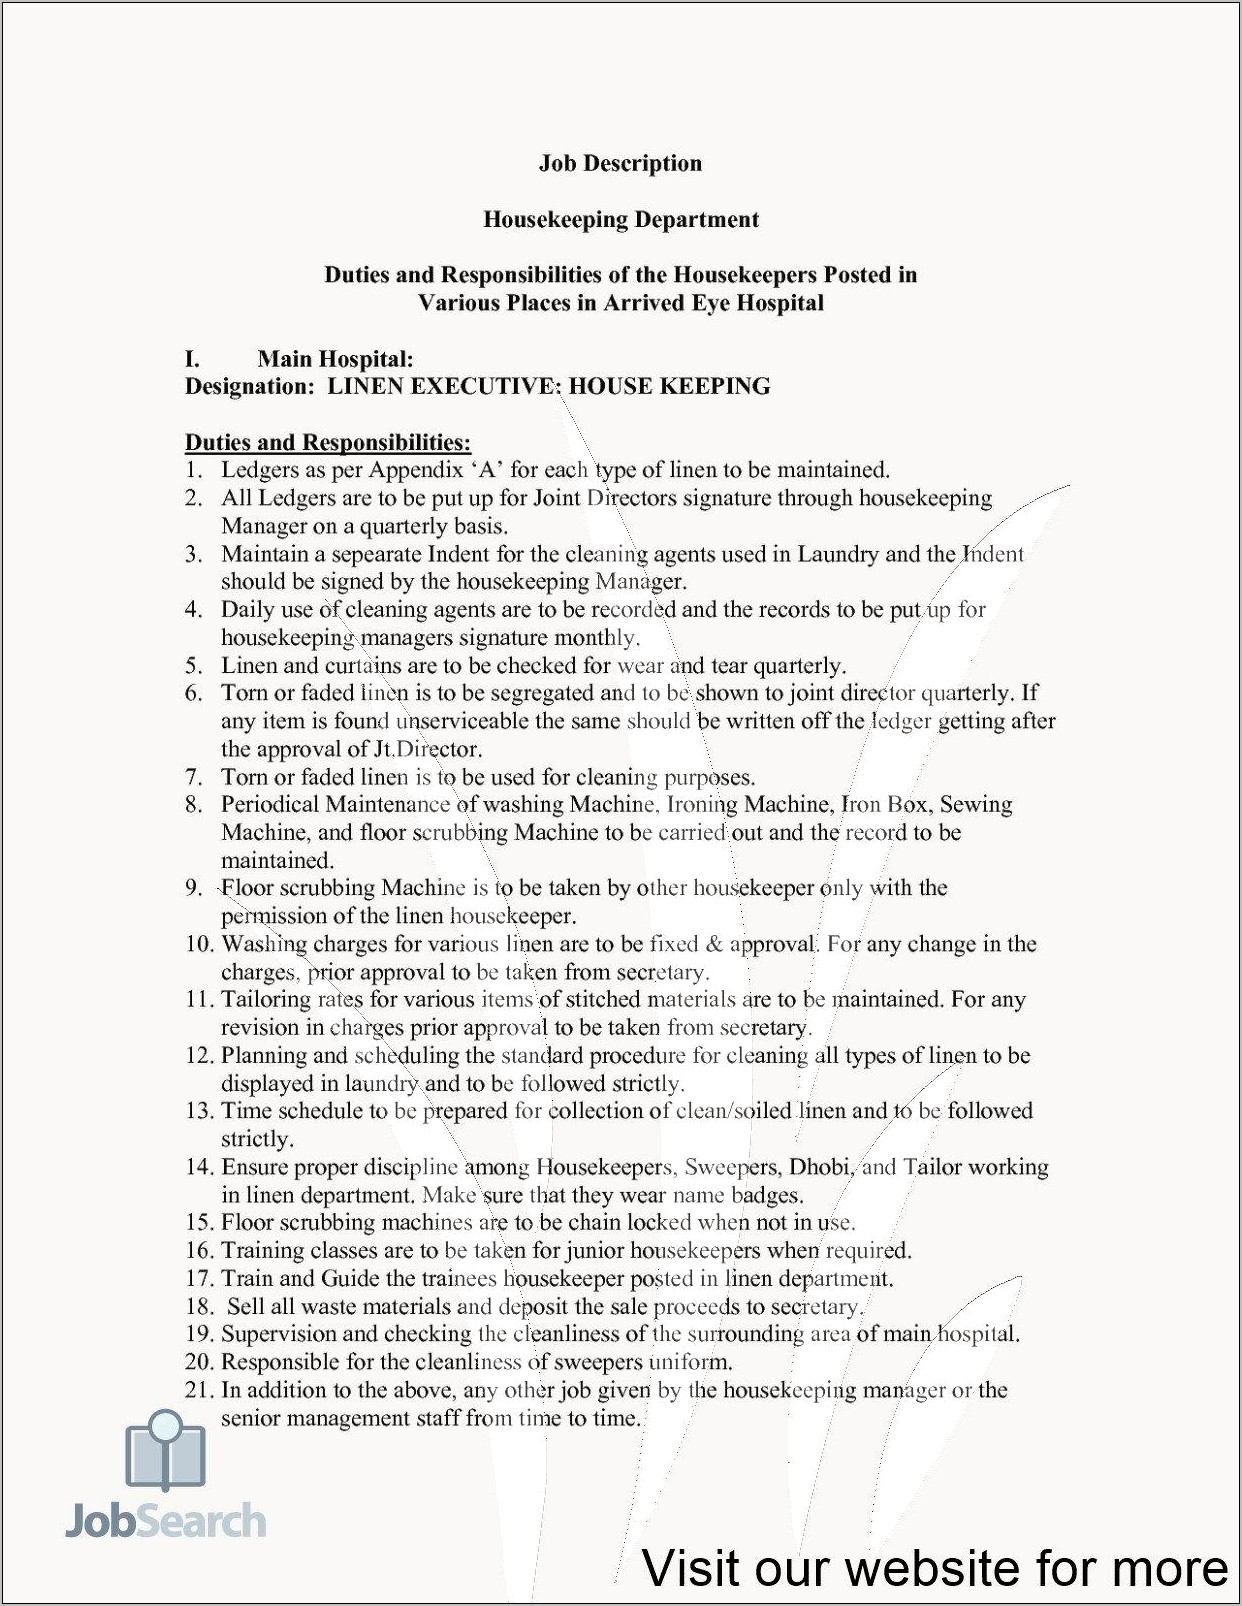 Sample Resume For Housekeeping Job In Hospital